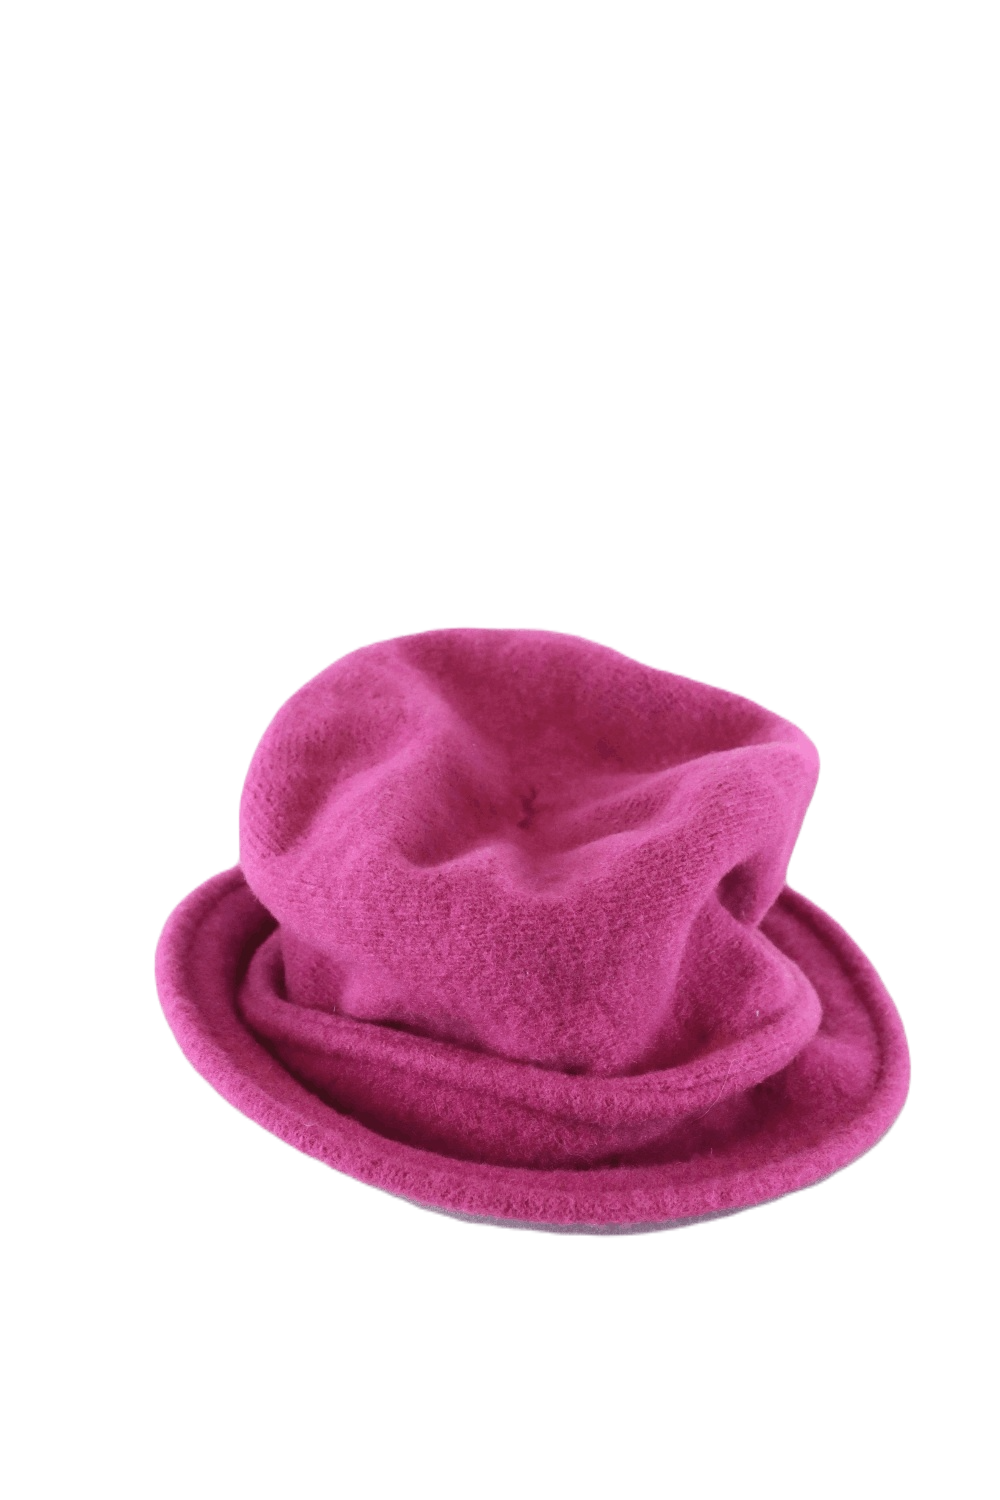 Scala Pronto Pink Hat